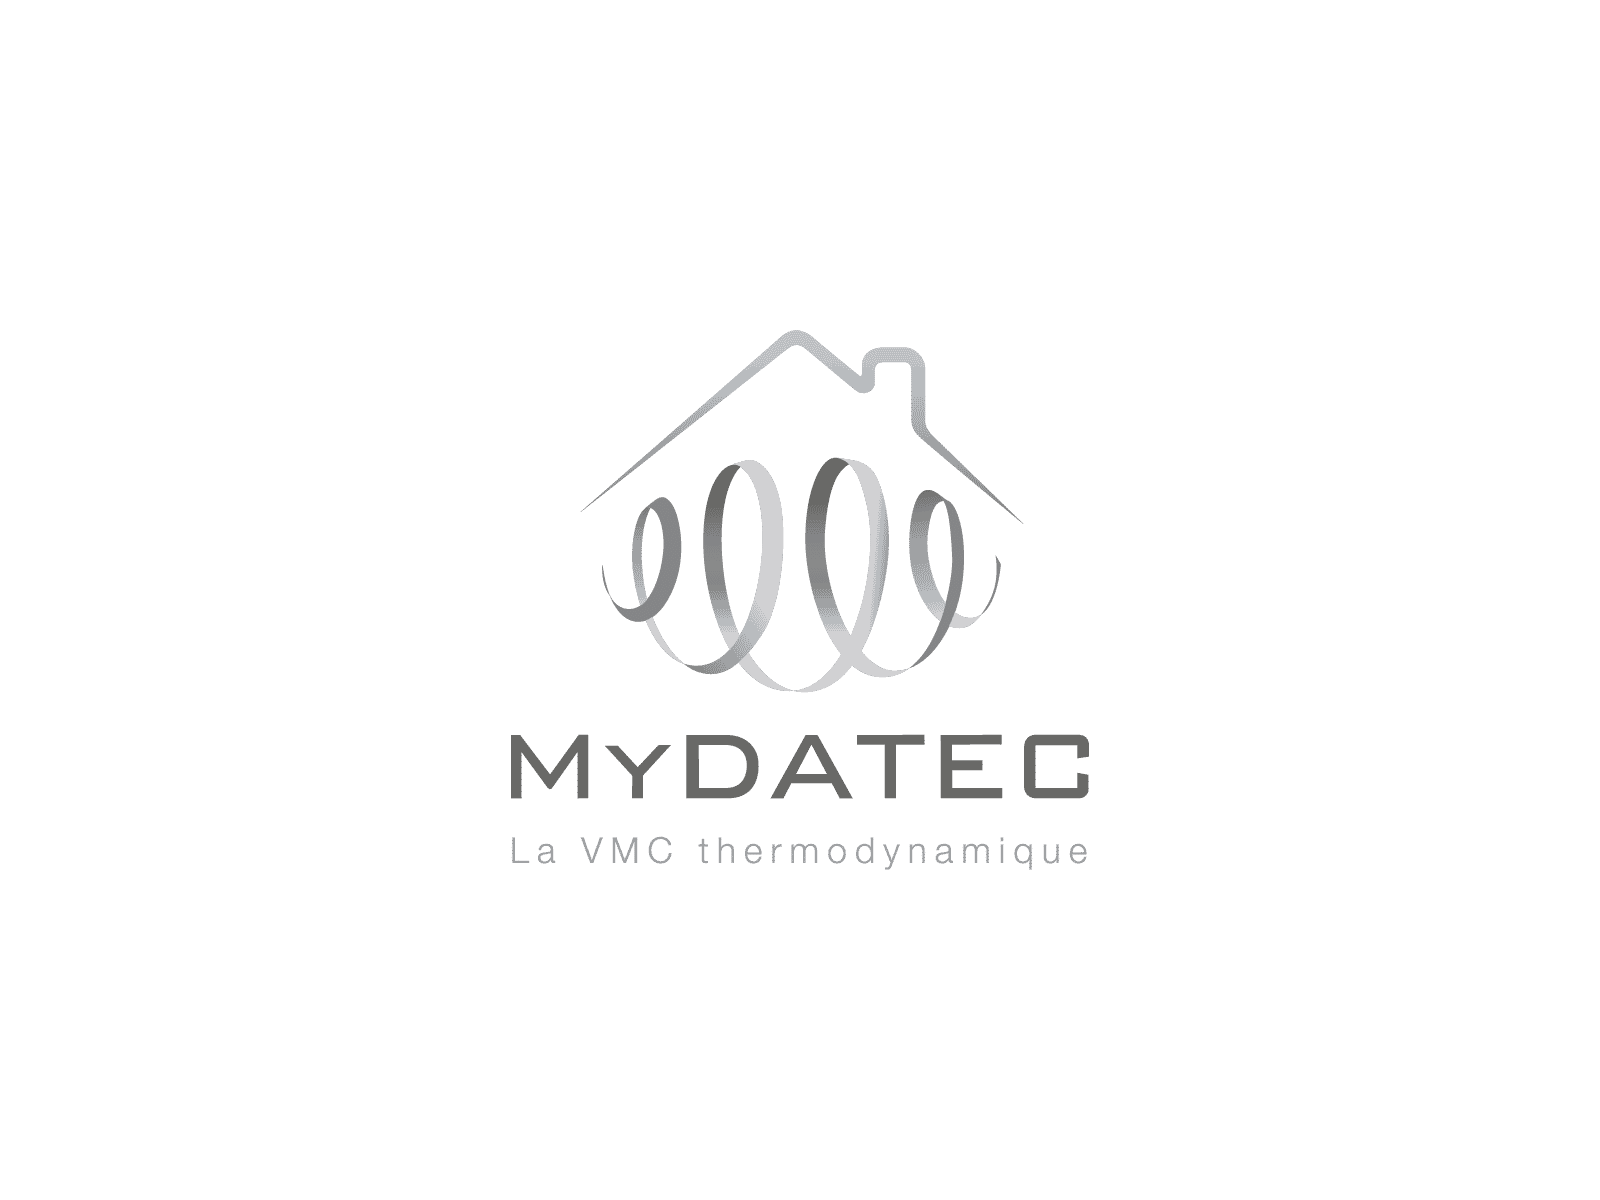 Logo mydatec